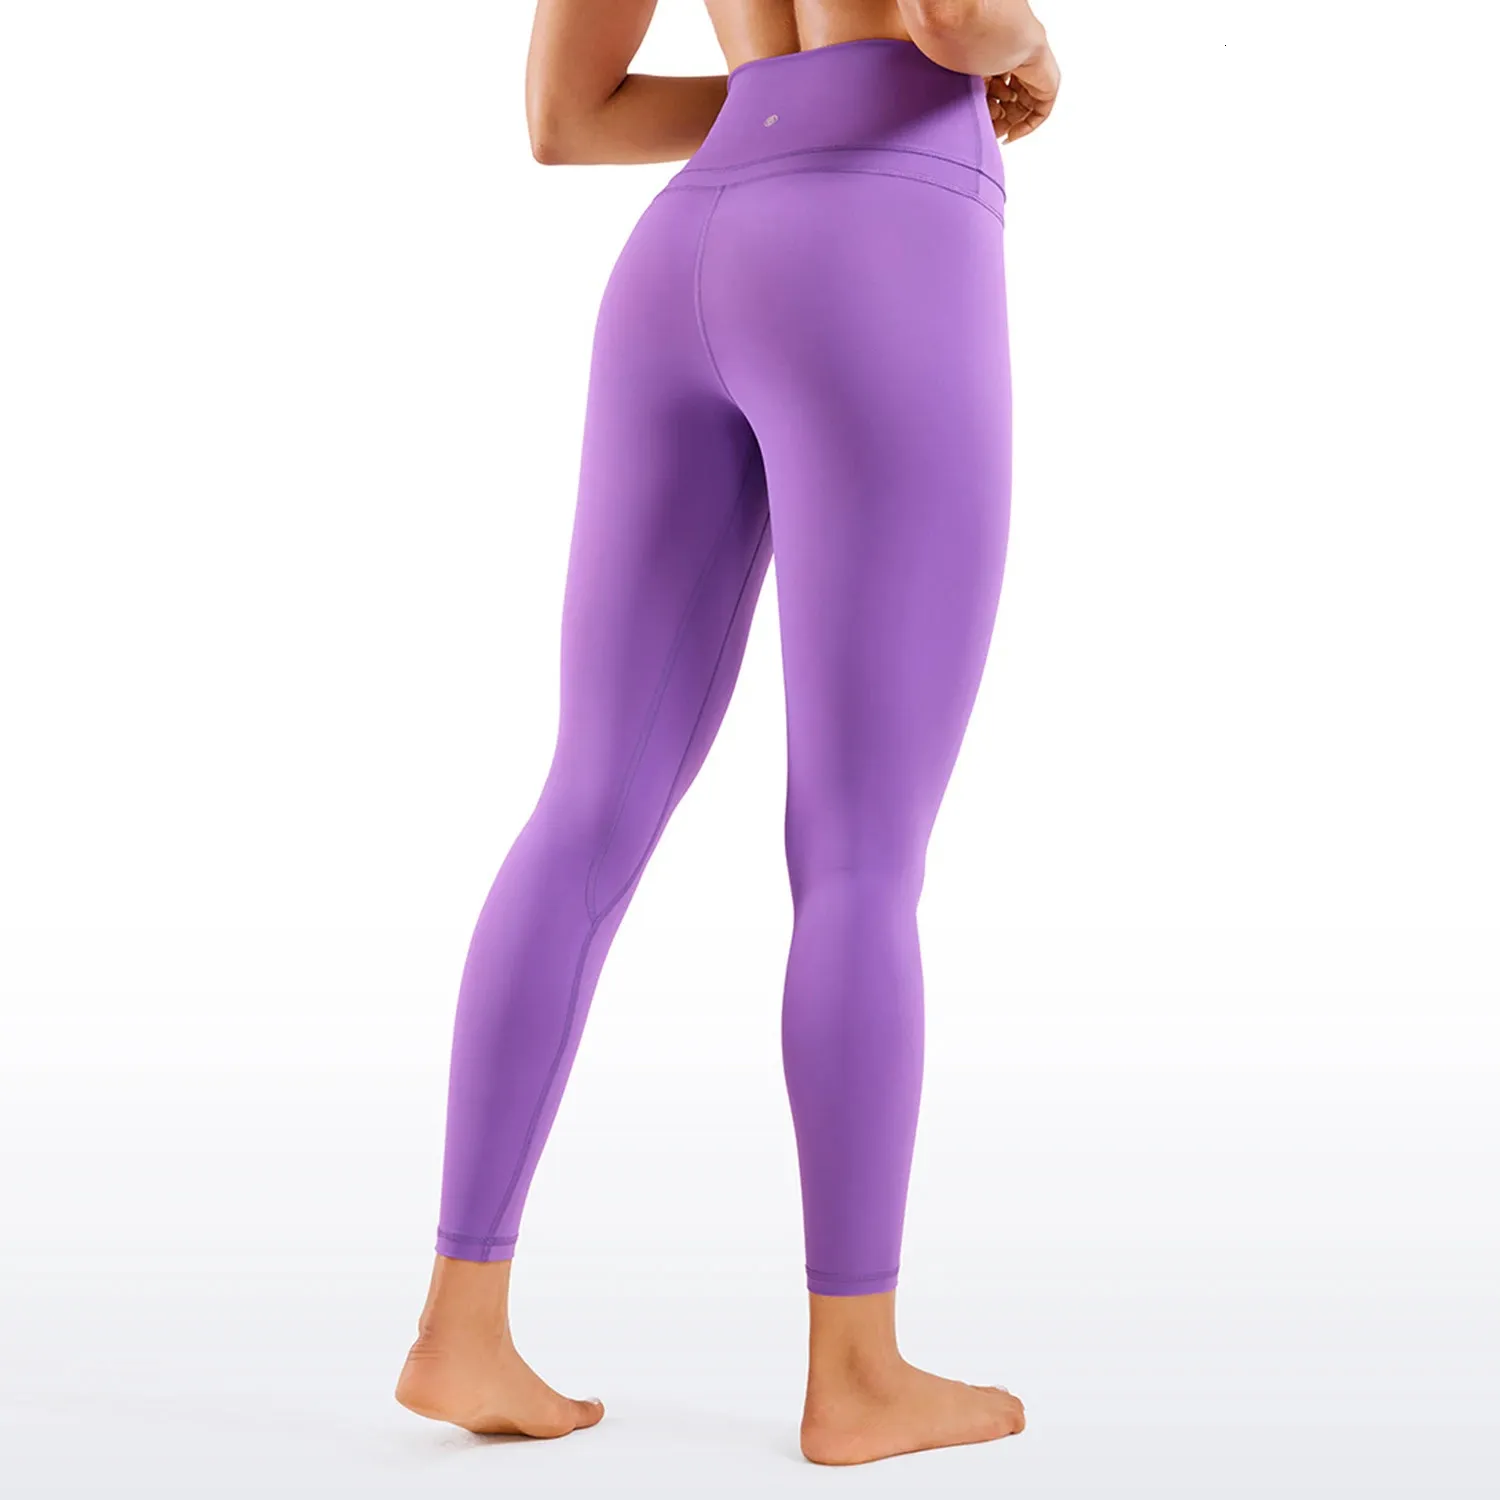 CRZ Yoga Womens Naked Feeling Workout Align Leggings 25 High Waist Tight  Pants 231121 From Heng06, $22.16